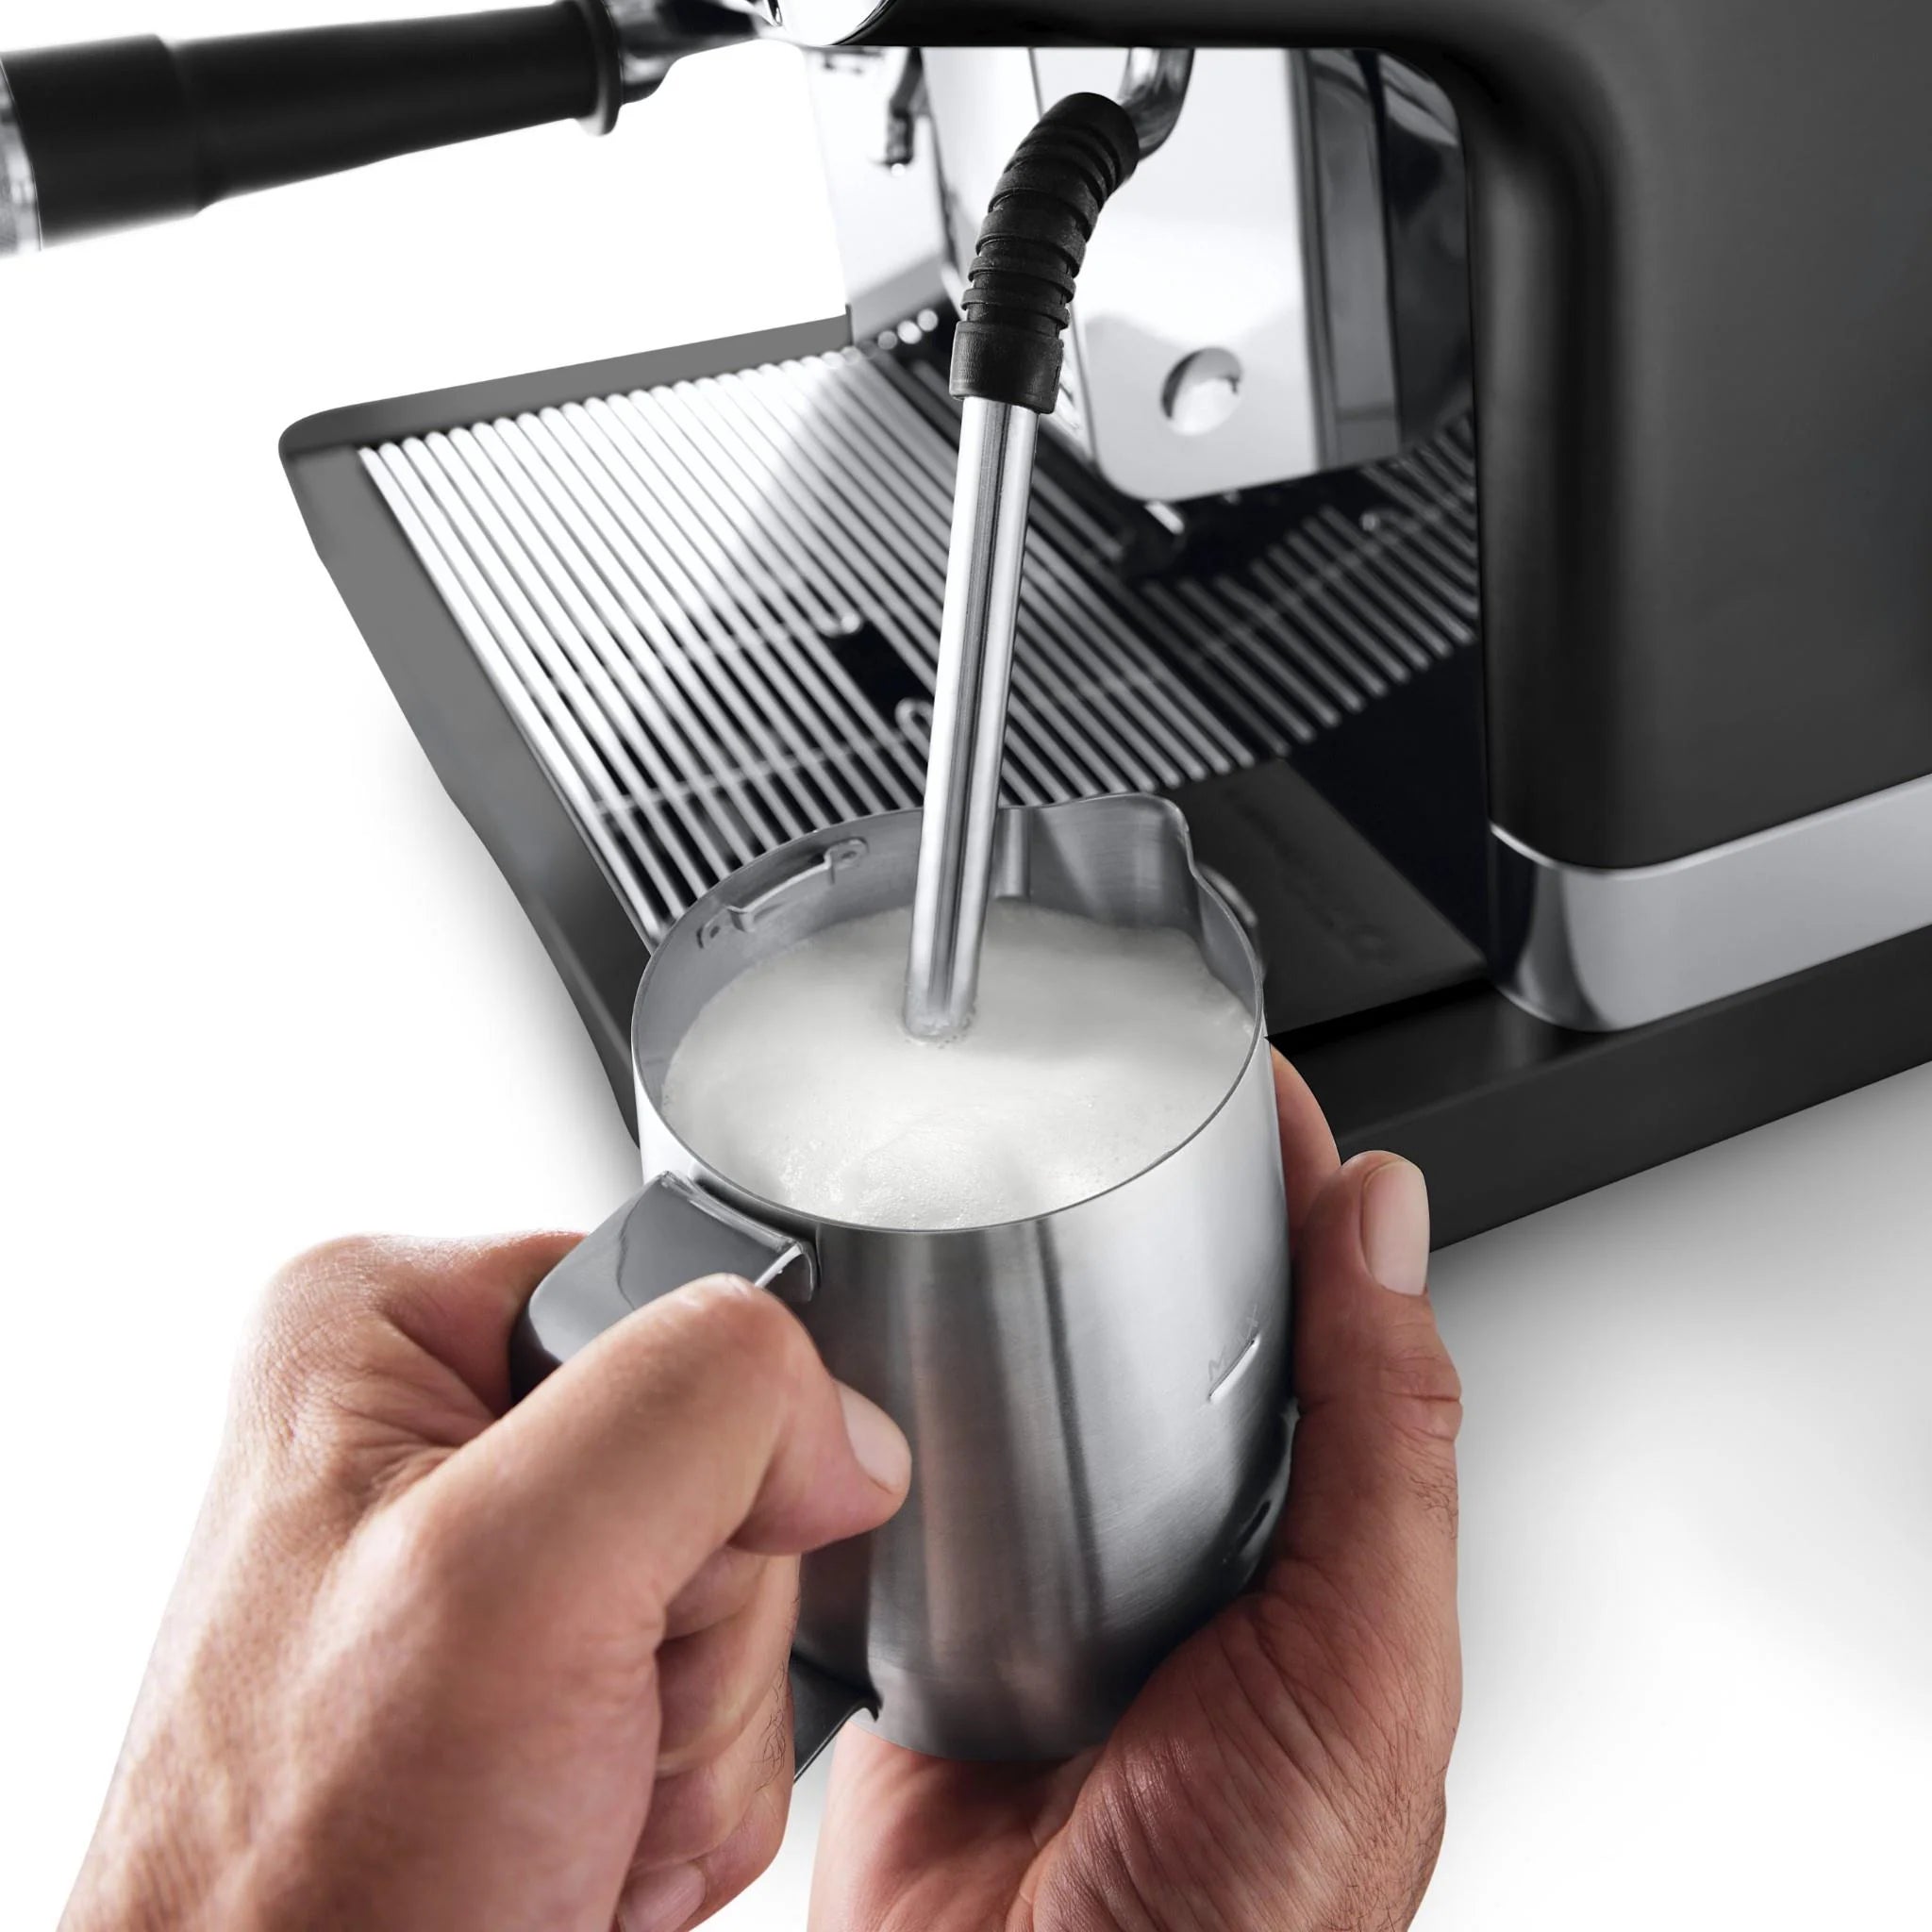 De'Longhi LaSpecialista Prestigio Manual Coffee Machine (Matt Black)